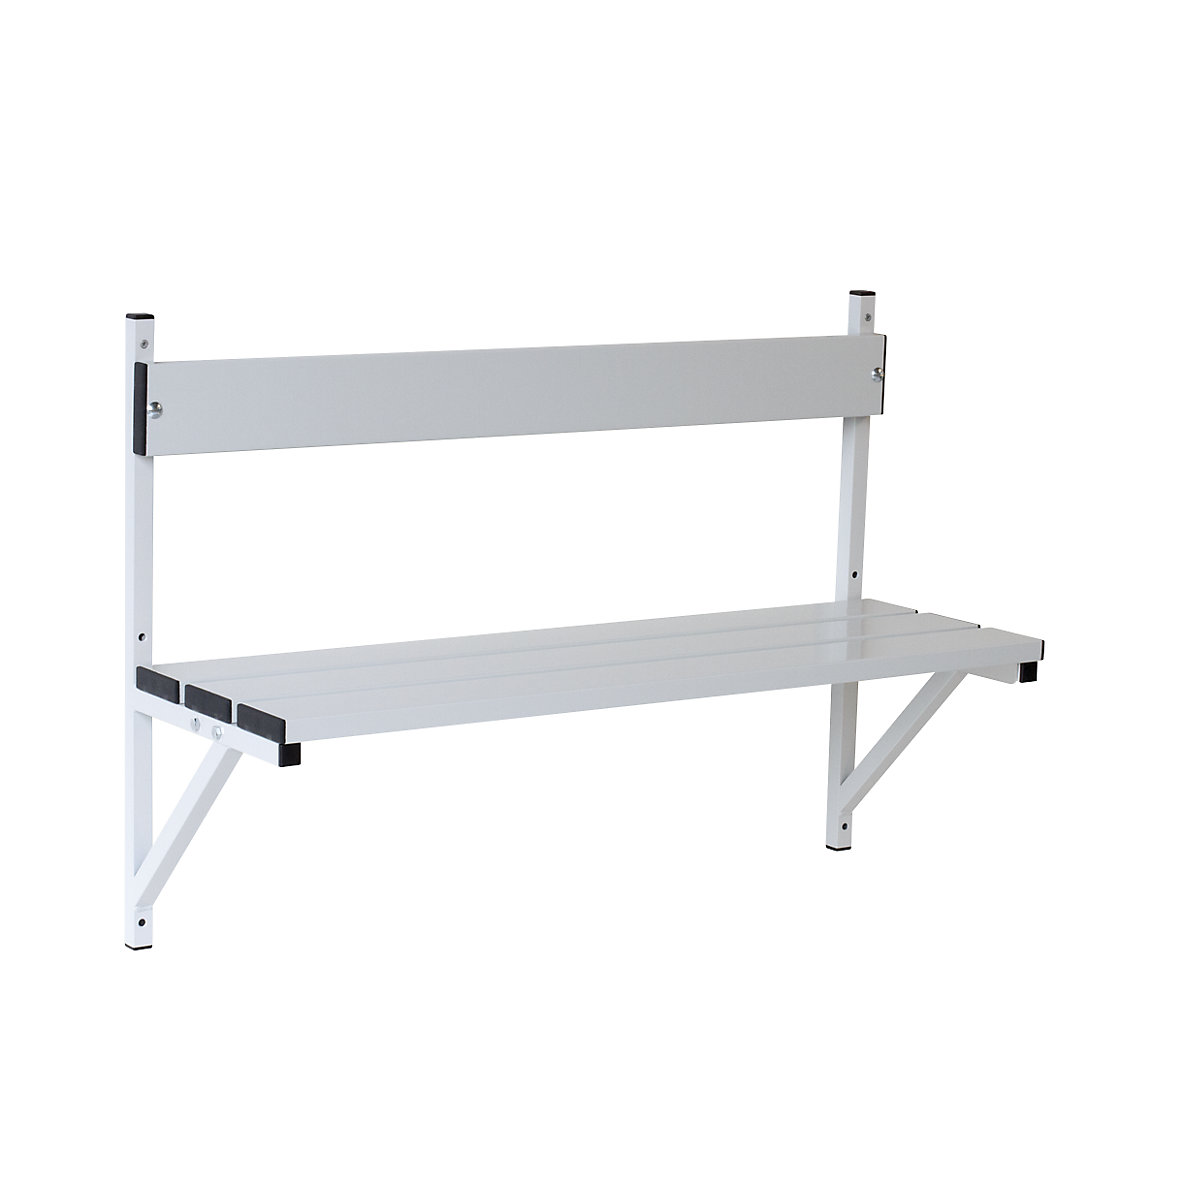 Wall mounted bench – Sypro